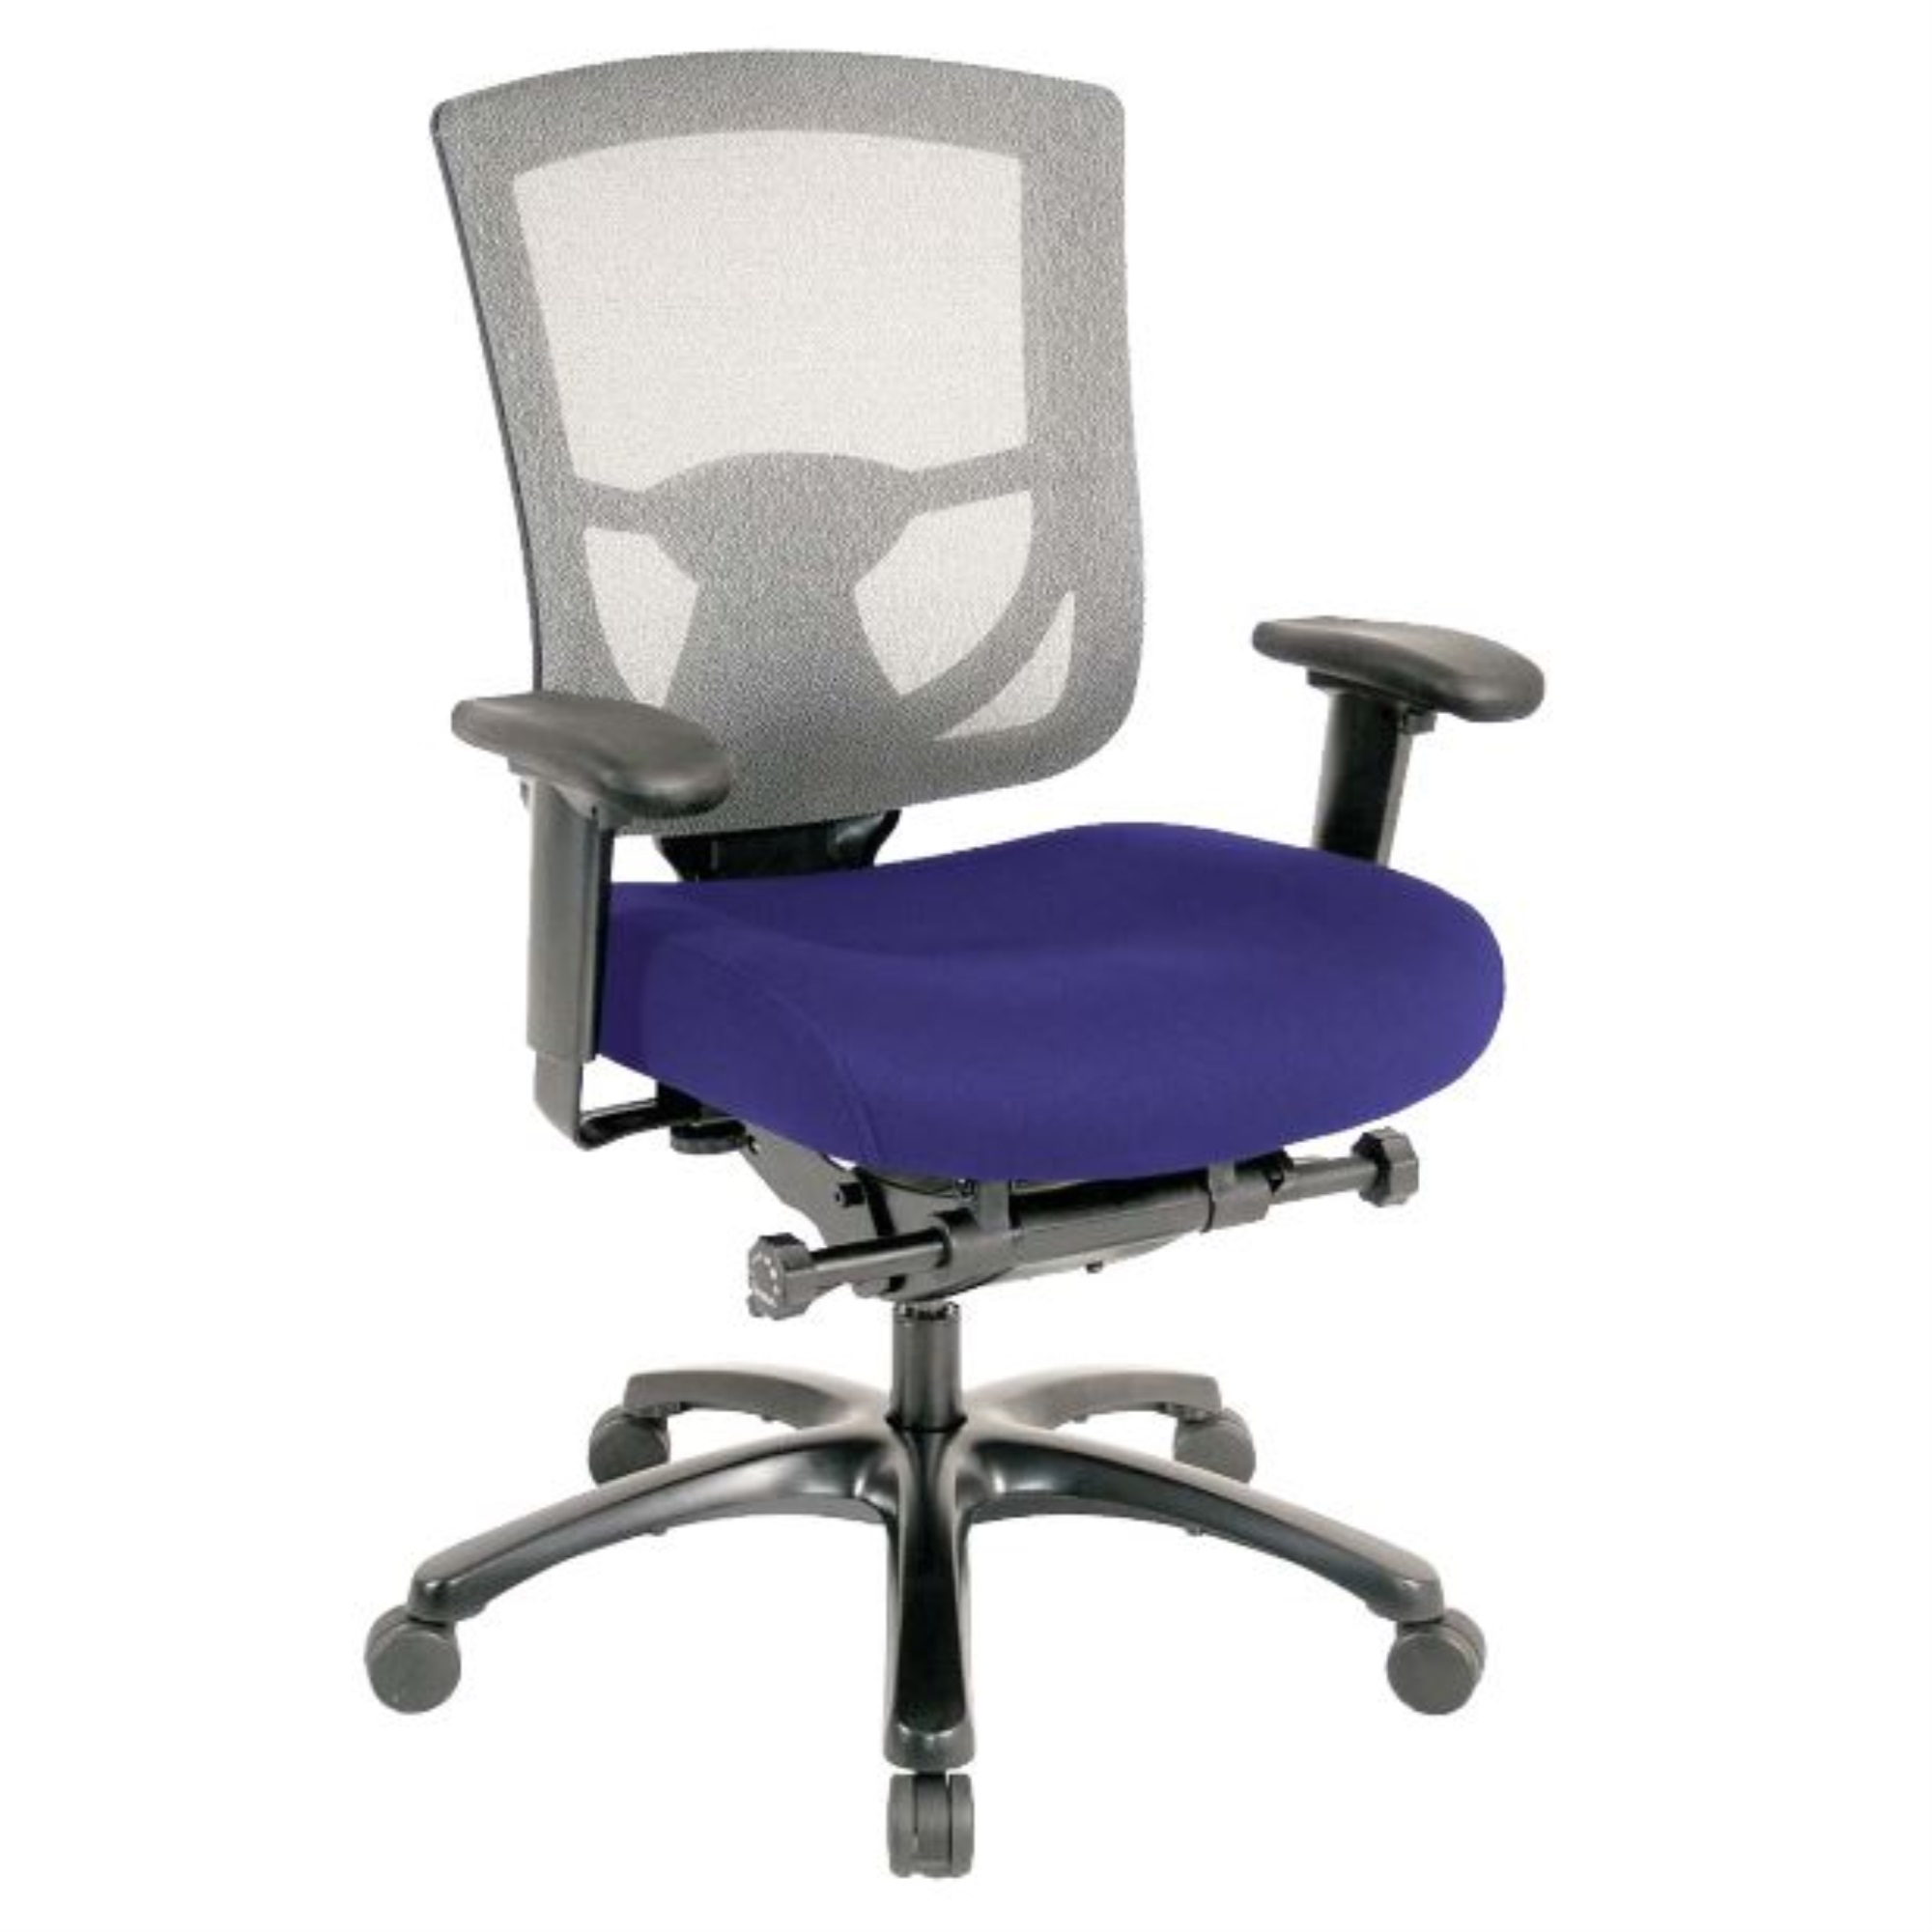 27.2" x 25.6" x 39.8" Cobalt Mesh/Fabric Chair